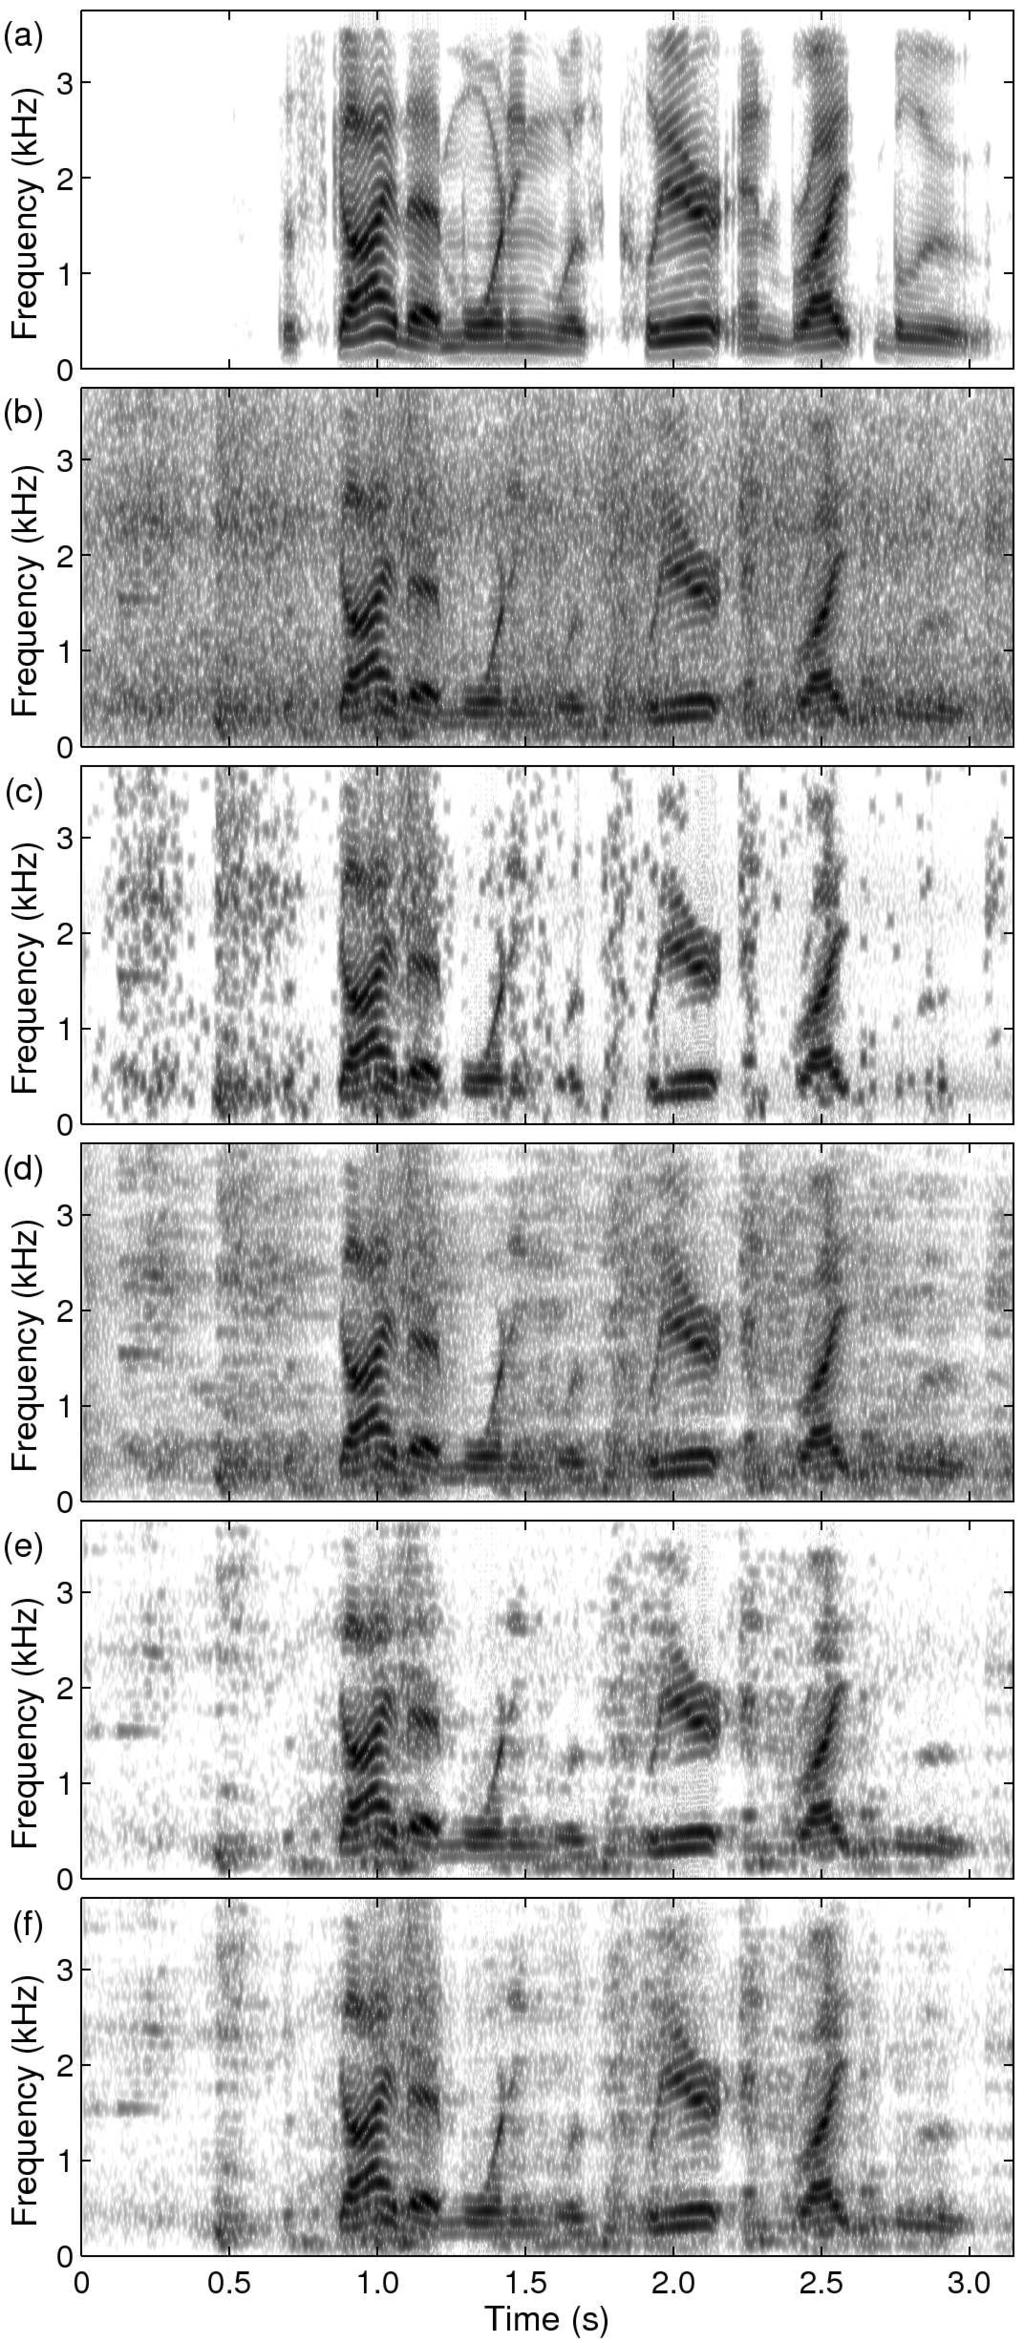 Fig. 21: Spectrograms of sp10 utterance, The sky that morning speech corpus: (a) clean speech (PESQ: 4.